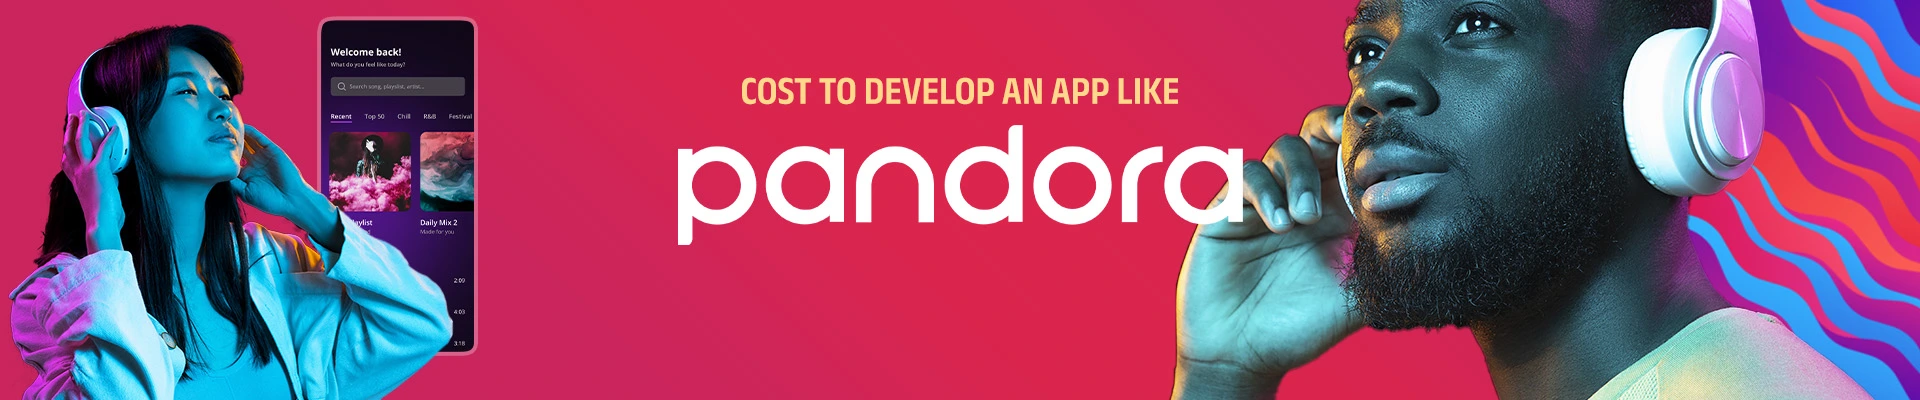 Cost To Develop an App Like Pandora